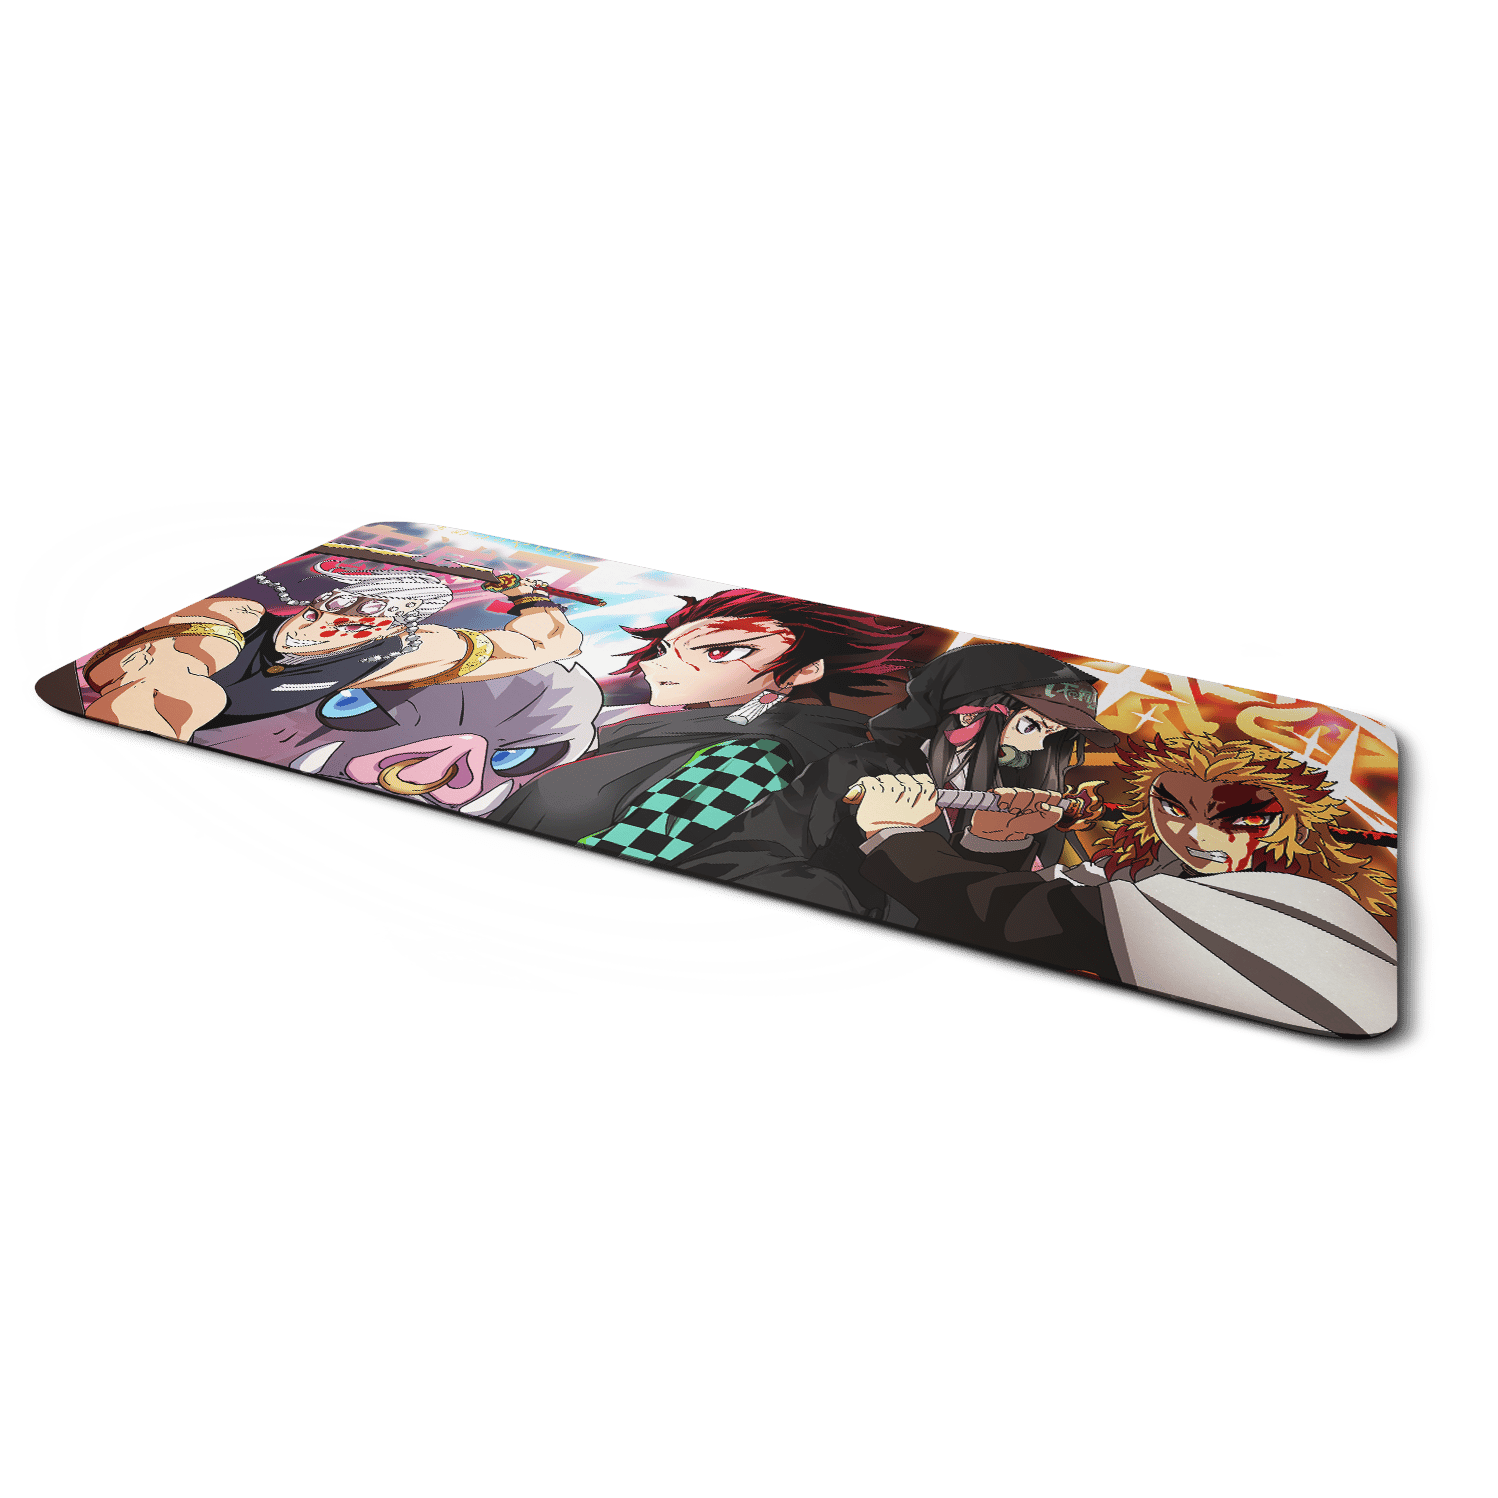 Anime & Cartoon Design Mouse Pads, Desk Mats - PandaPads